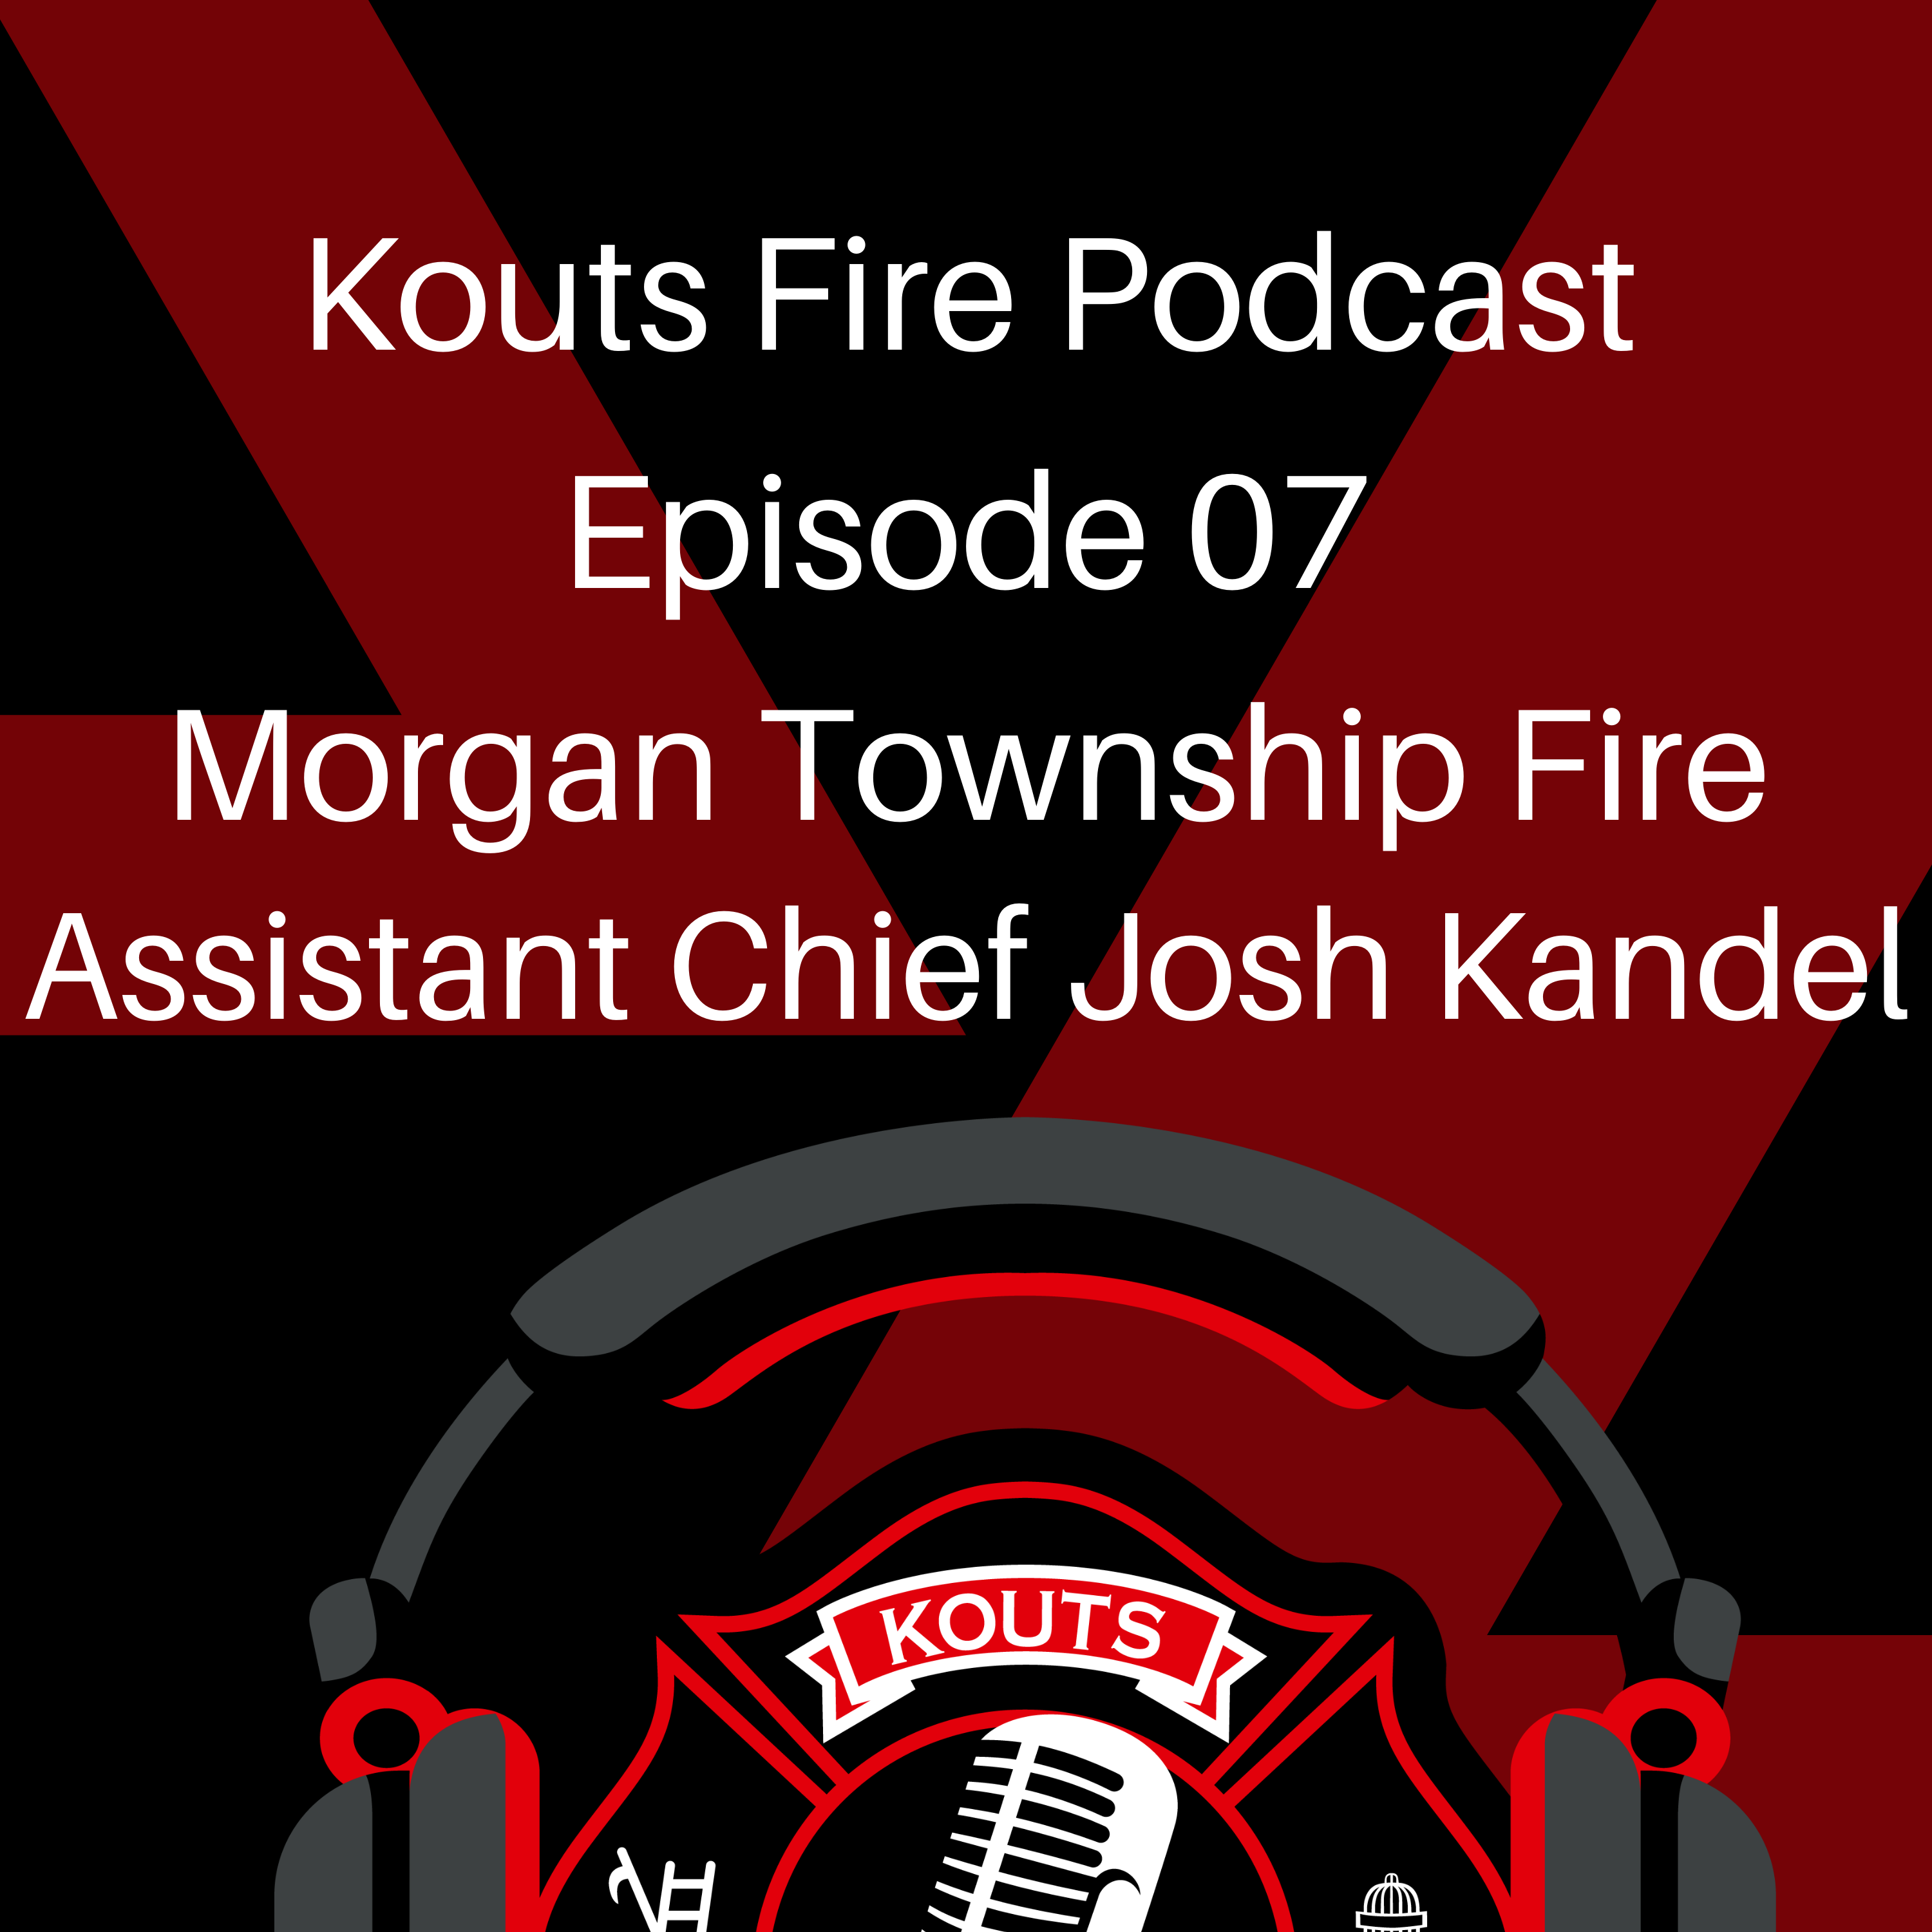 Morgan Township Assistant Chief Josh “Sparky” Kandel